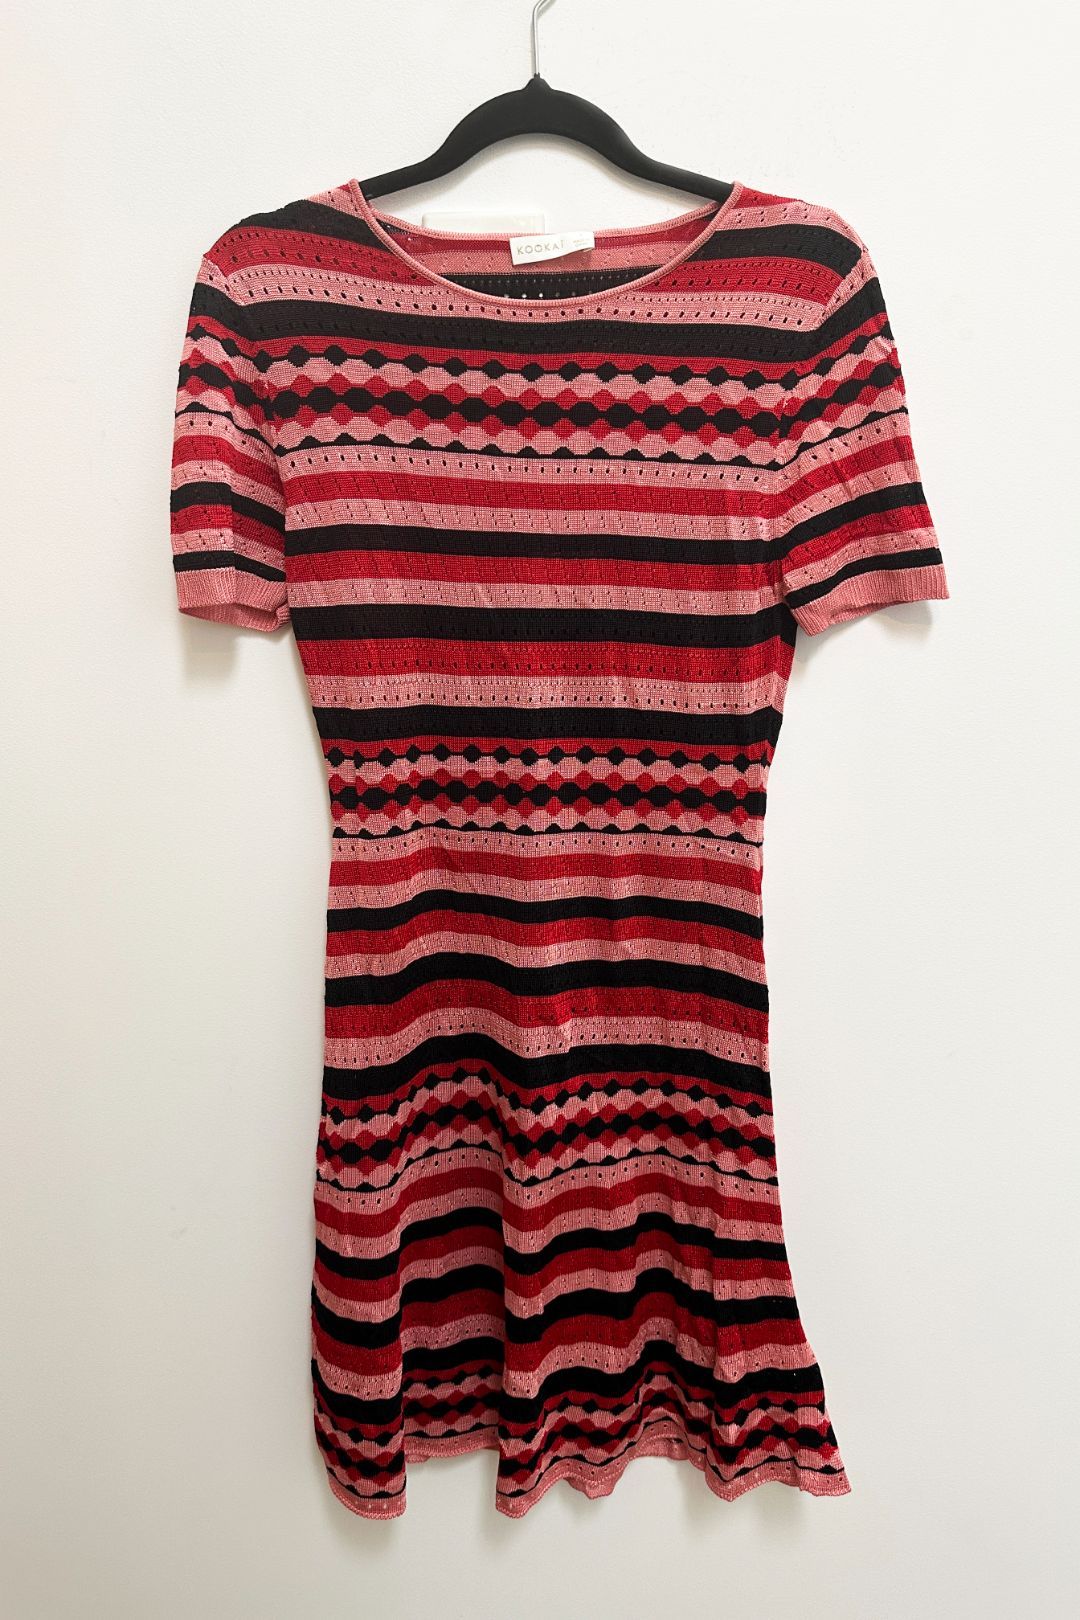 Kookai Majorca Fitted Knit Striped Dress in Multi